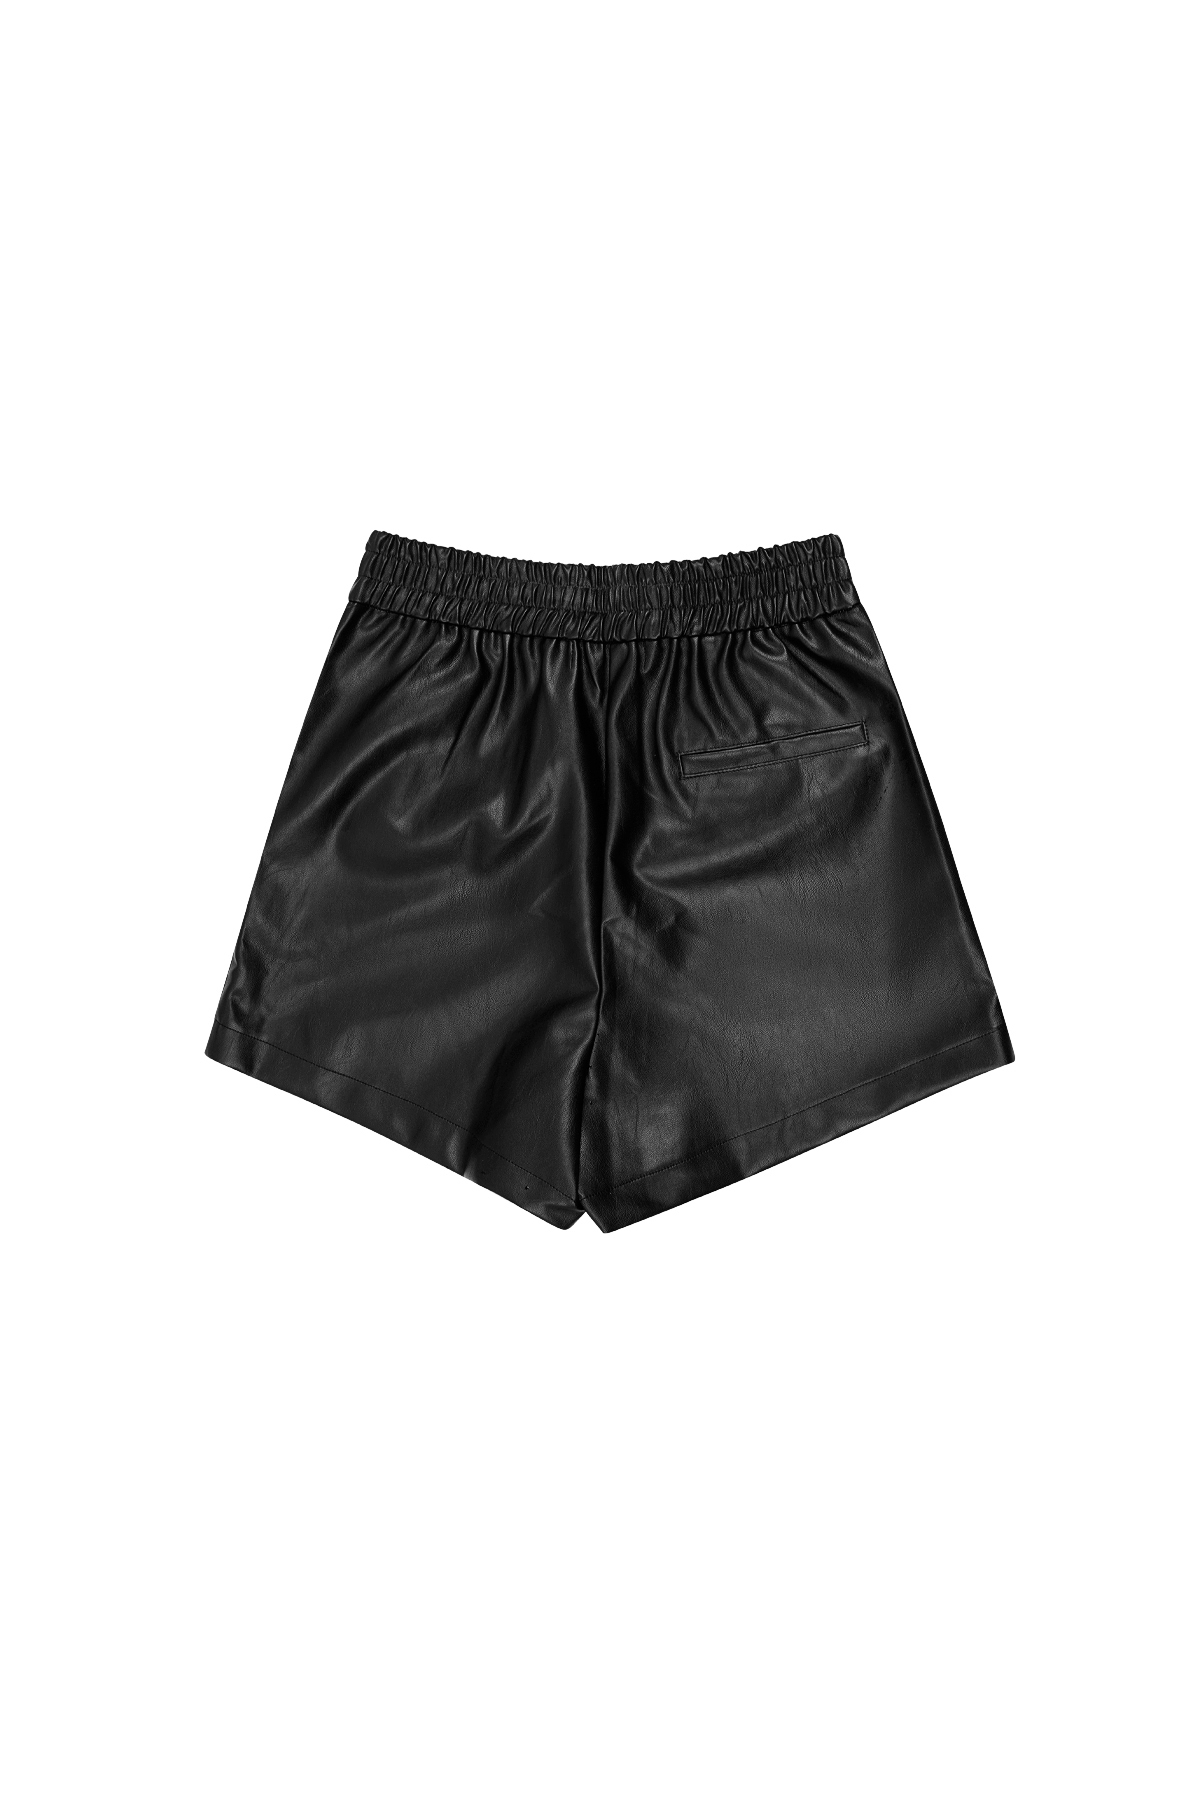 Shorts de cintura alta de cuero PU - negro Imagen6